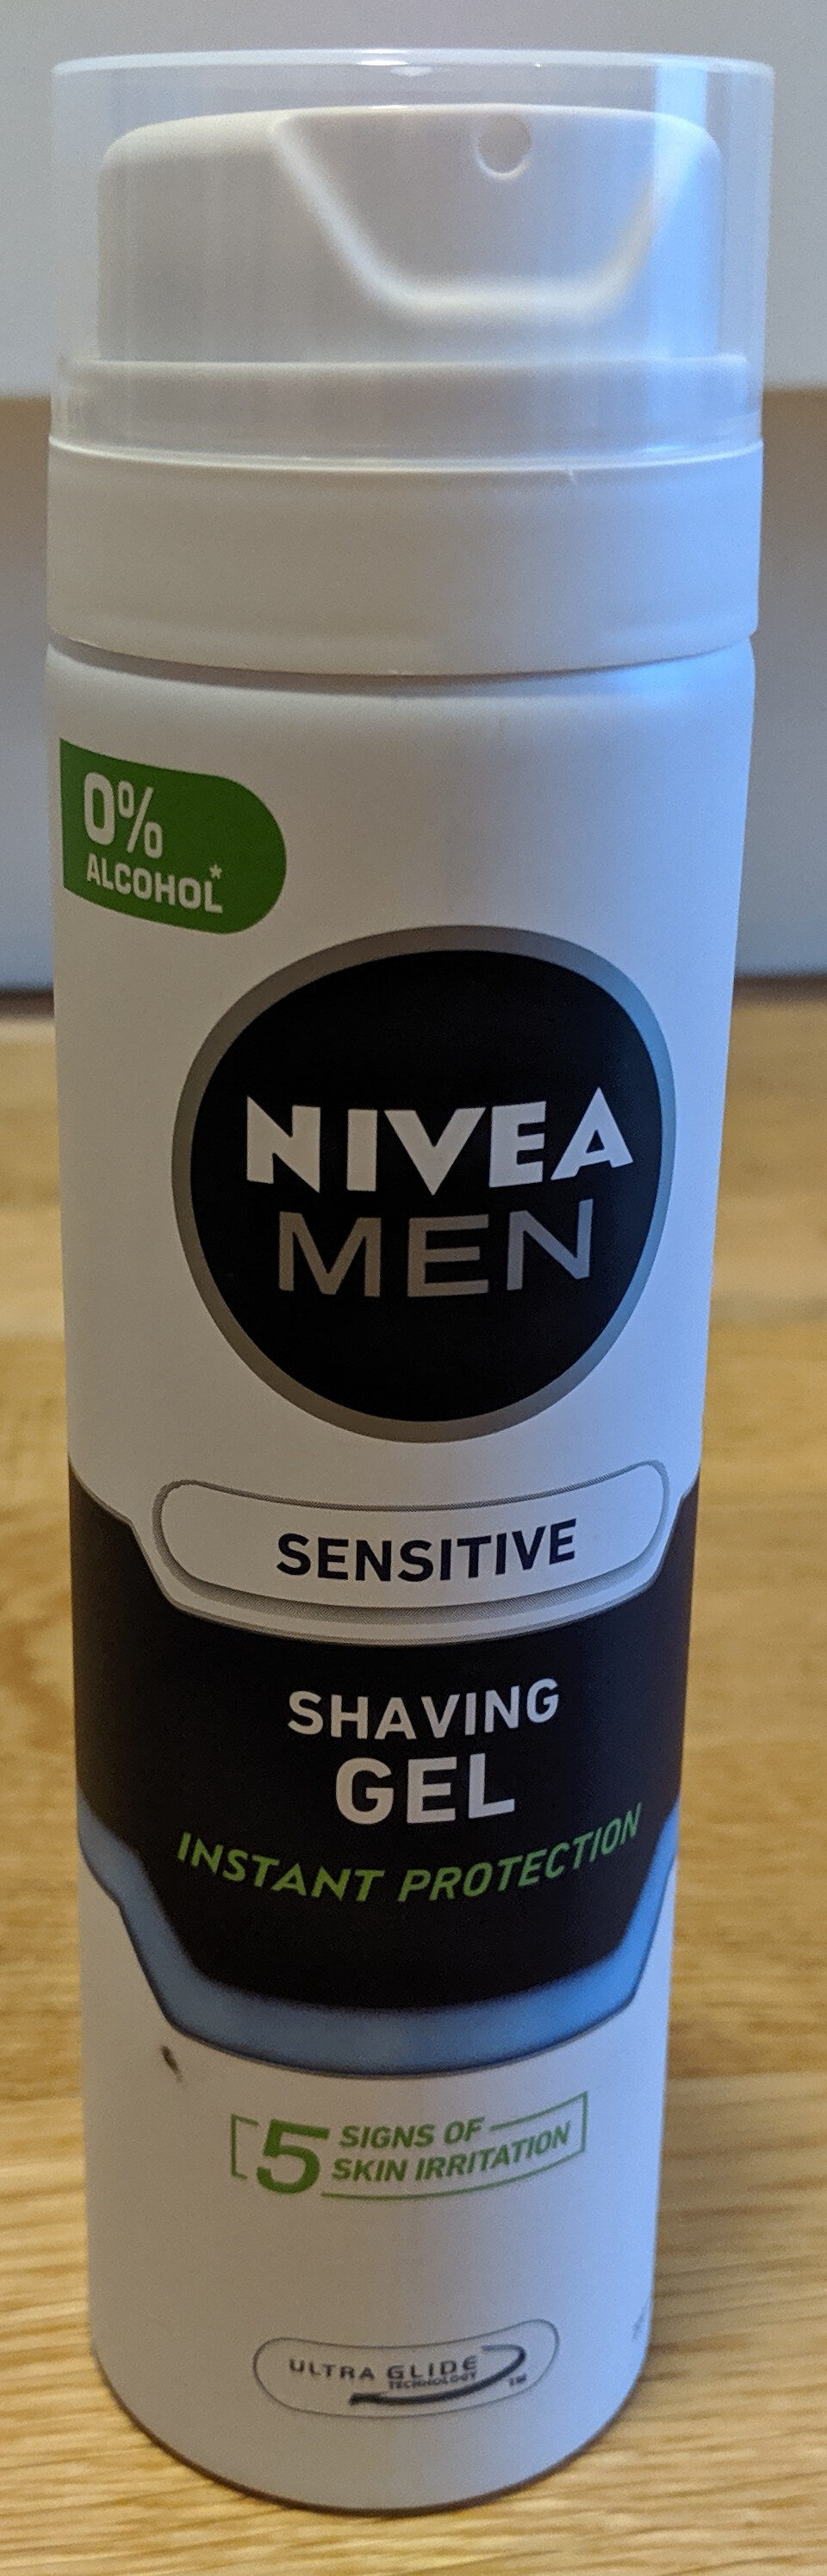 Nivea Men Shaving Gel Sensitive - Product - sv